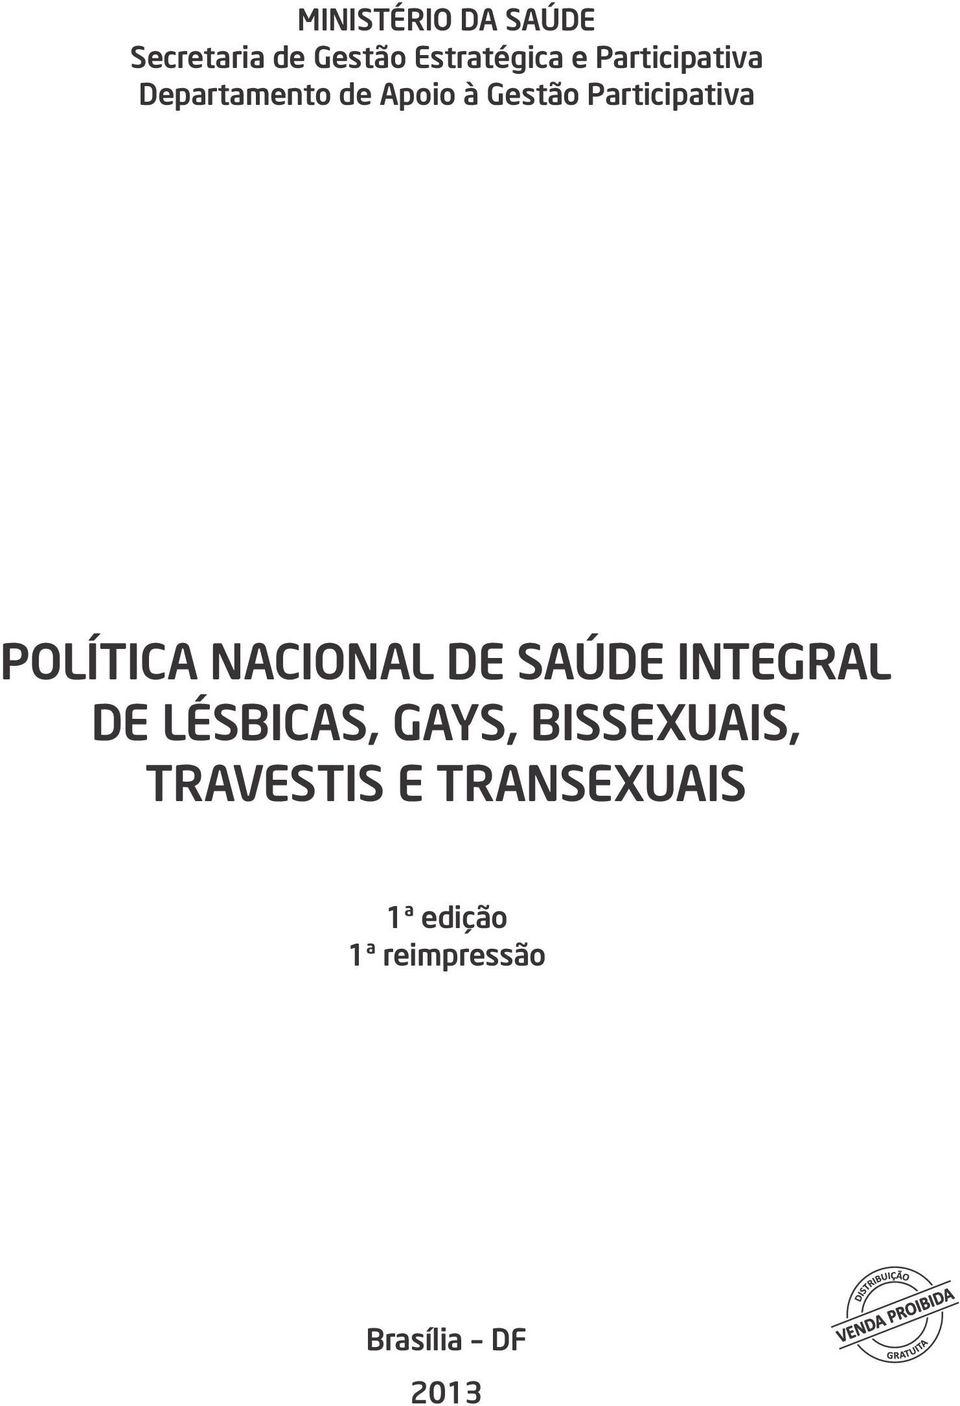 POLÍTICA NACIONAL DE SAÚDE INTEGRAL DE LÉSBICAS, GAYS,